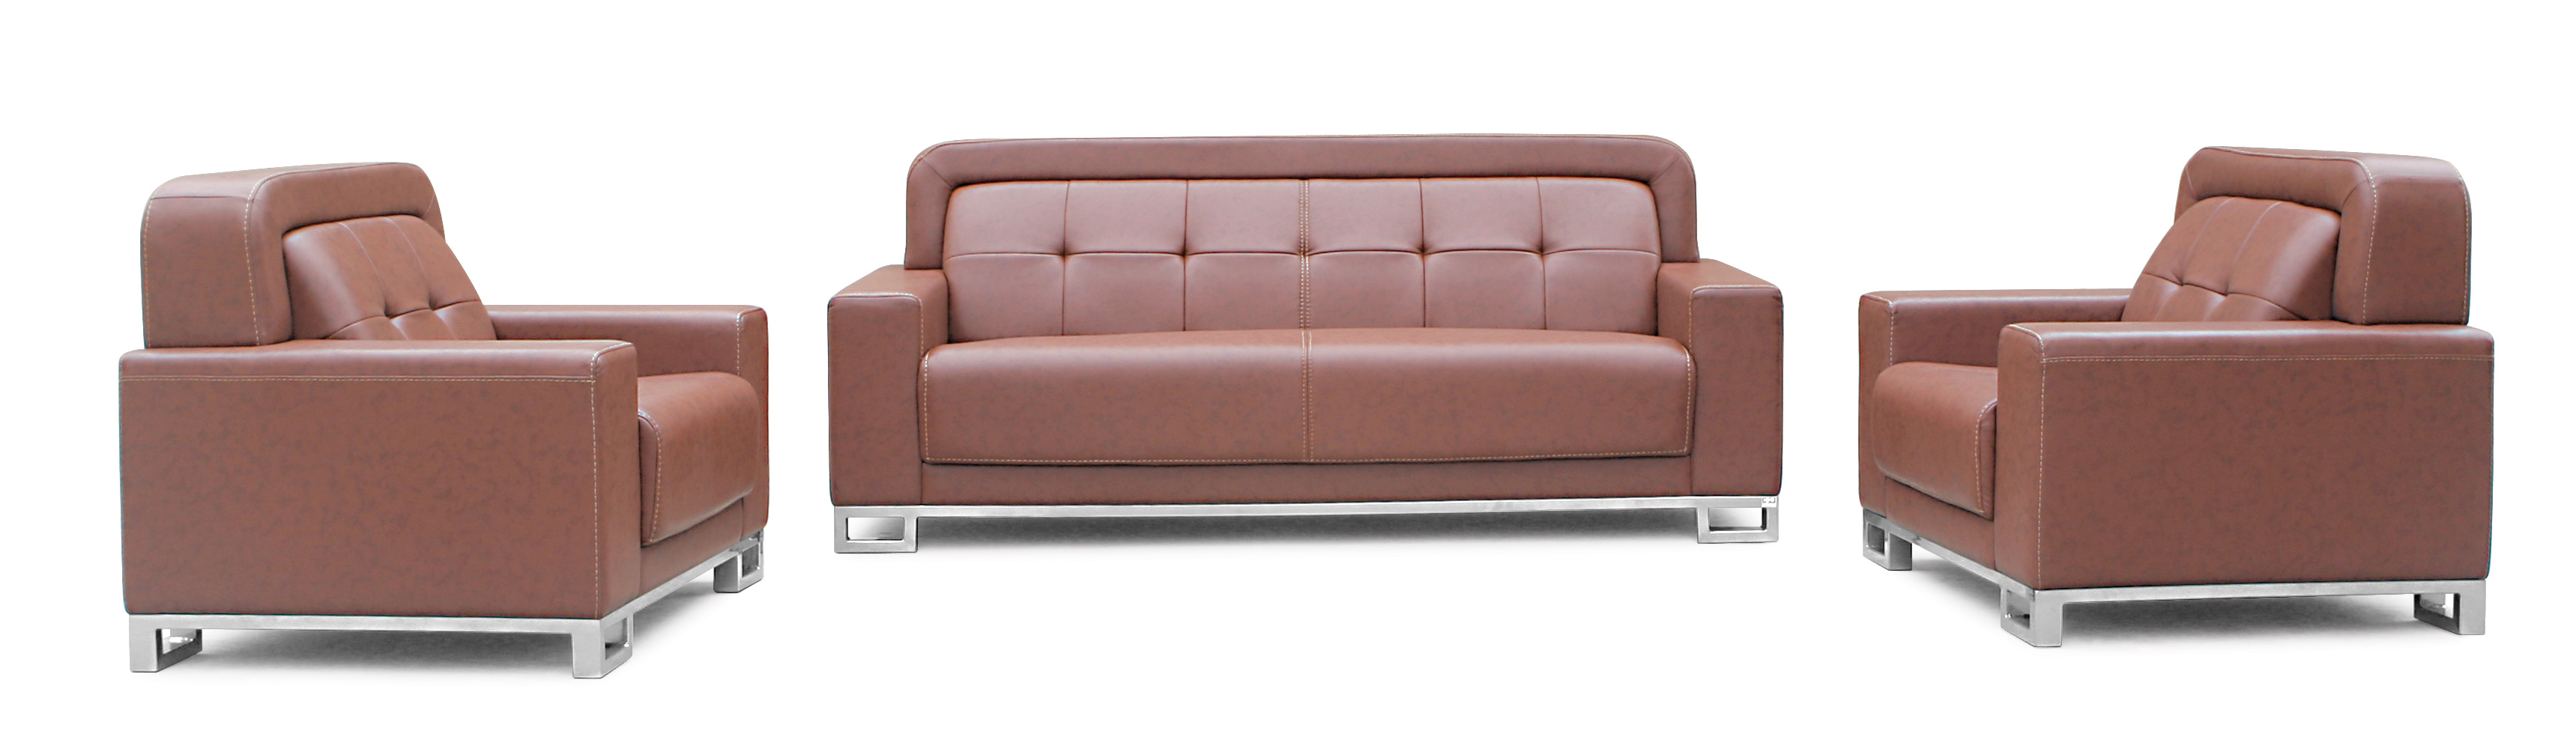 sofa van phong cao cap